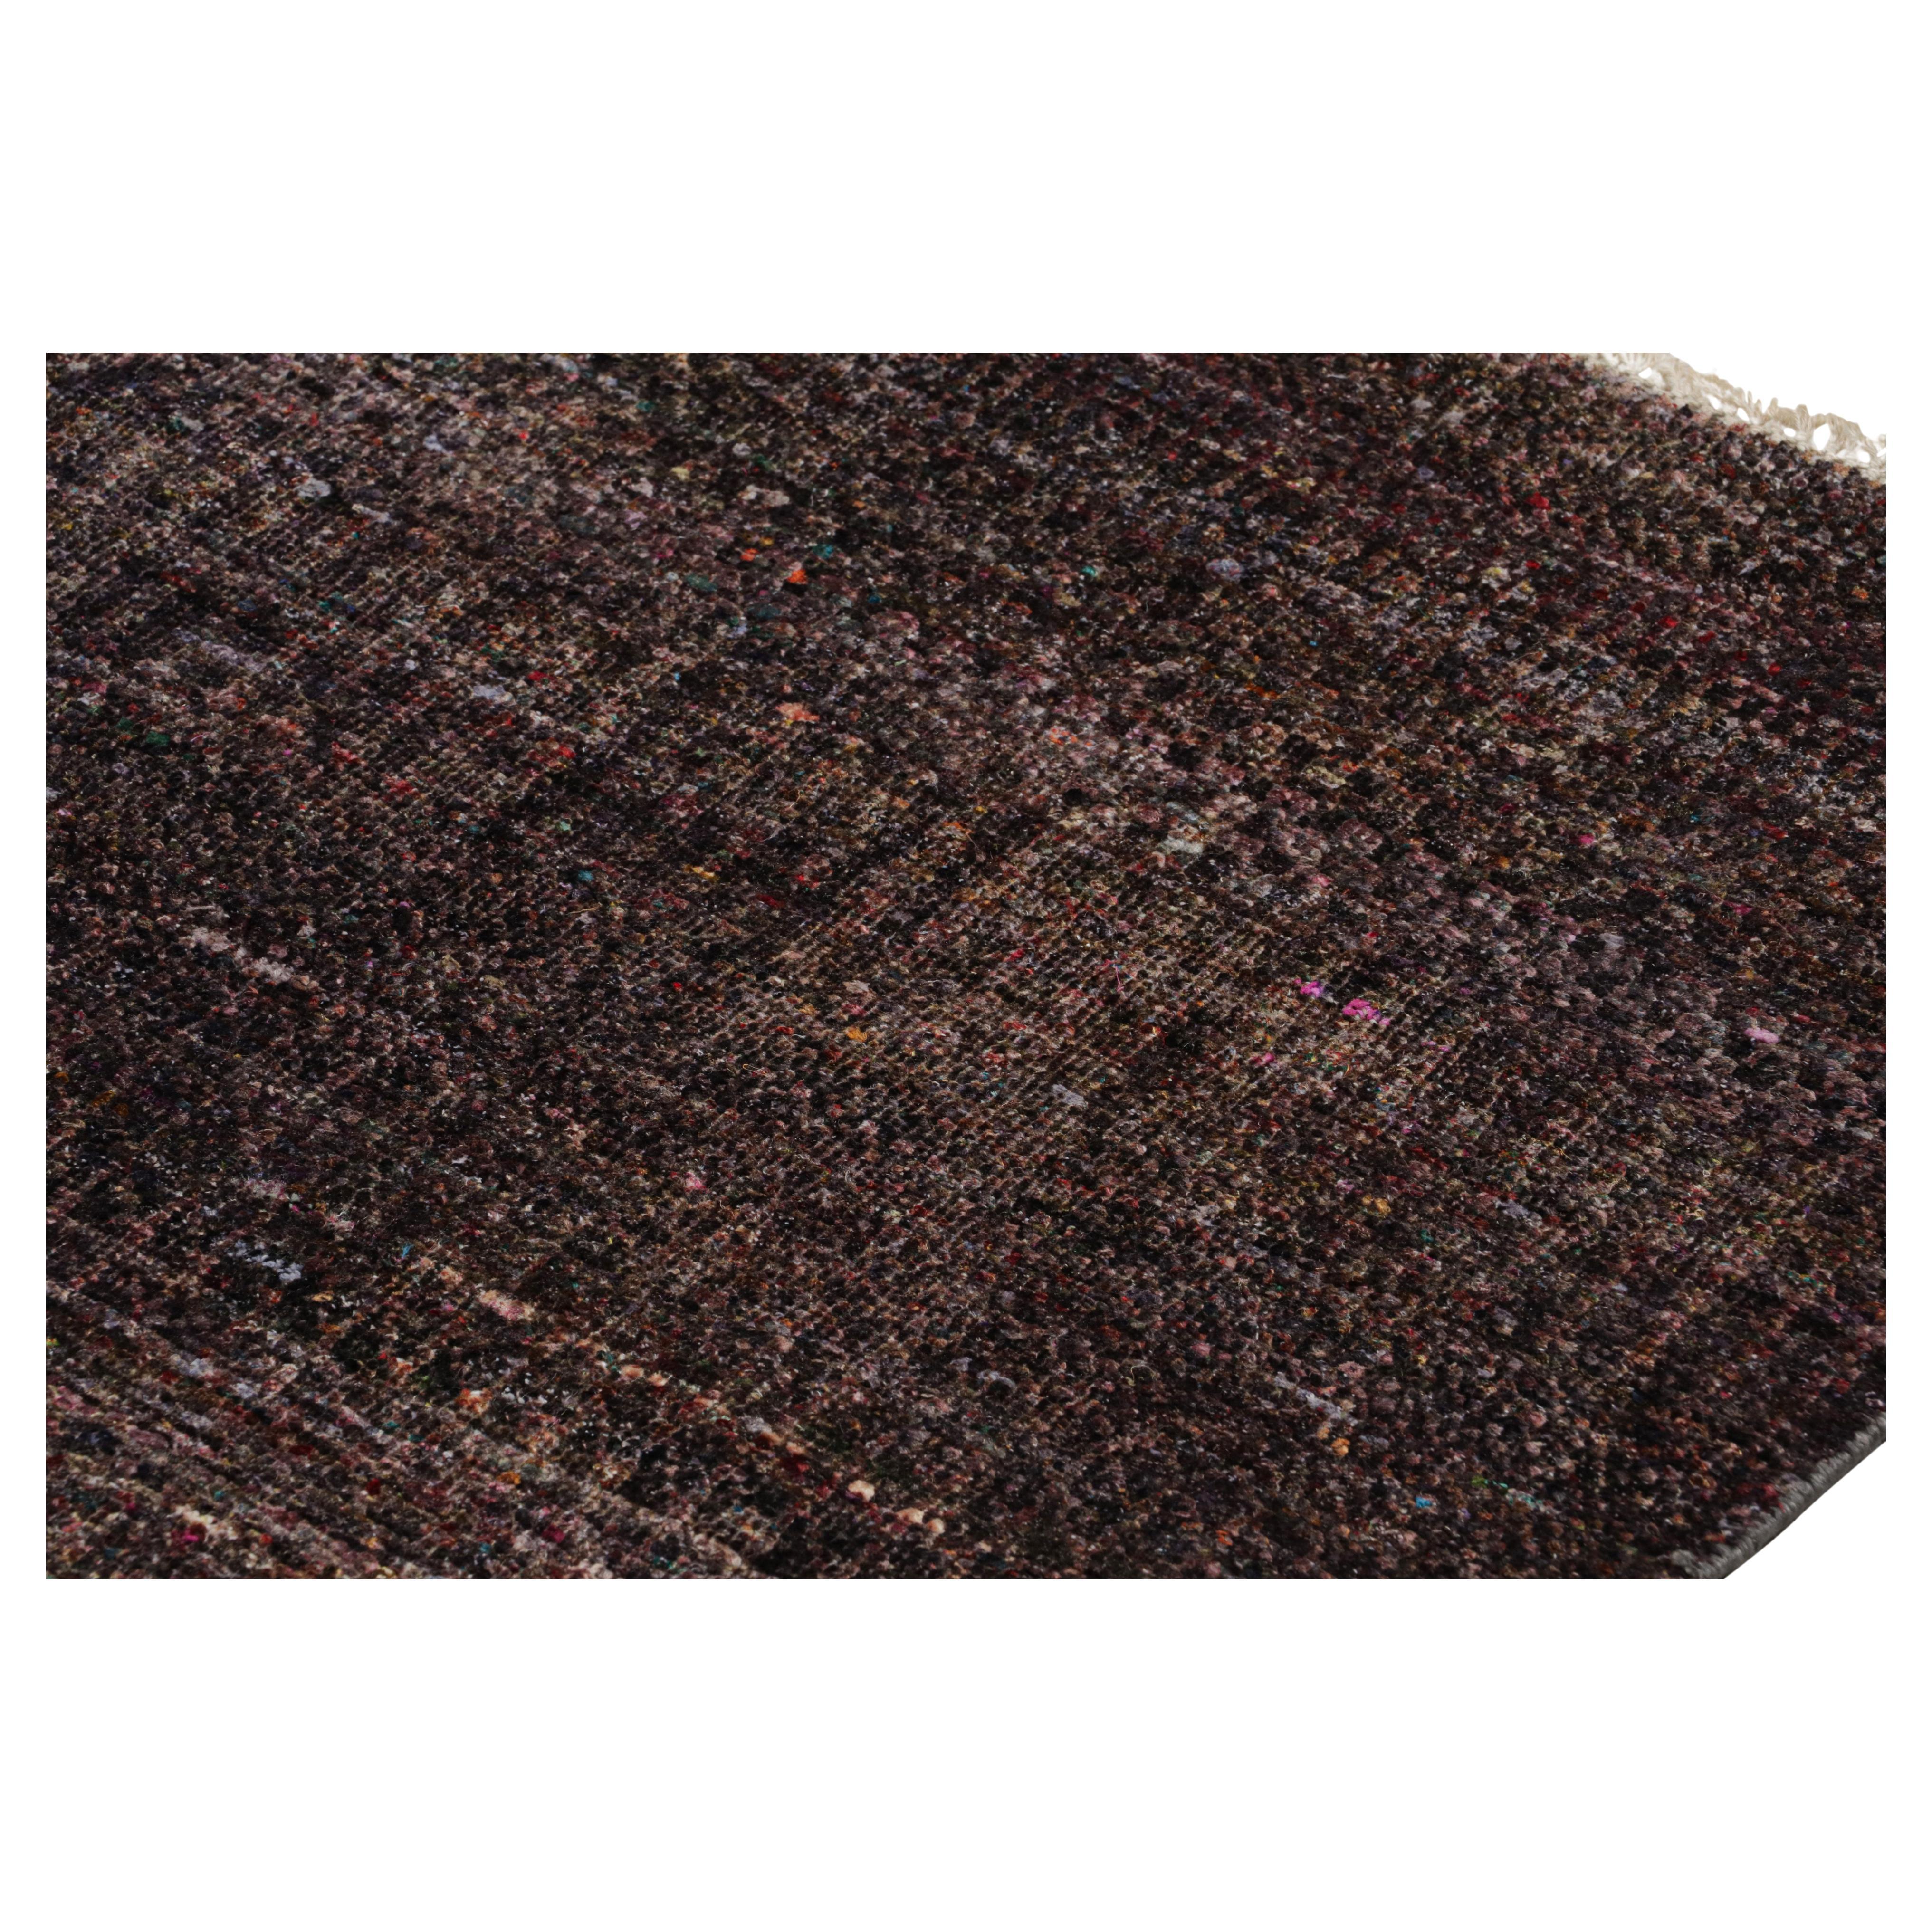 Rug & Kilim's Modern Textural Rug in Purple Tones and Polychrome Striae (tapis à texture moderne dans des tons violets et des rayures polychromes)